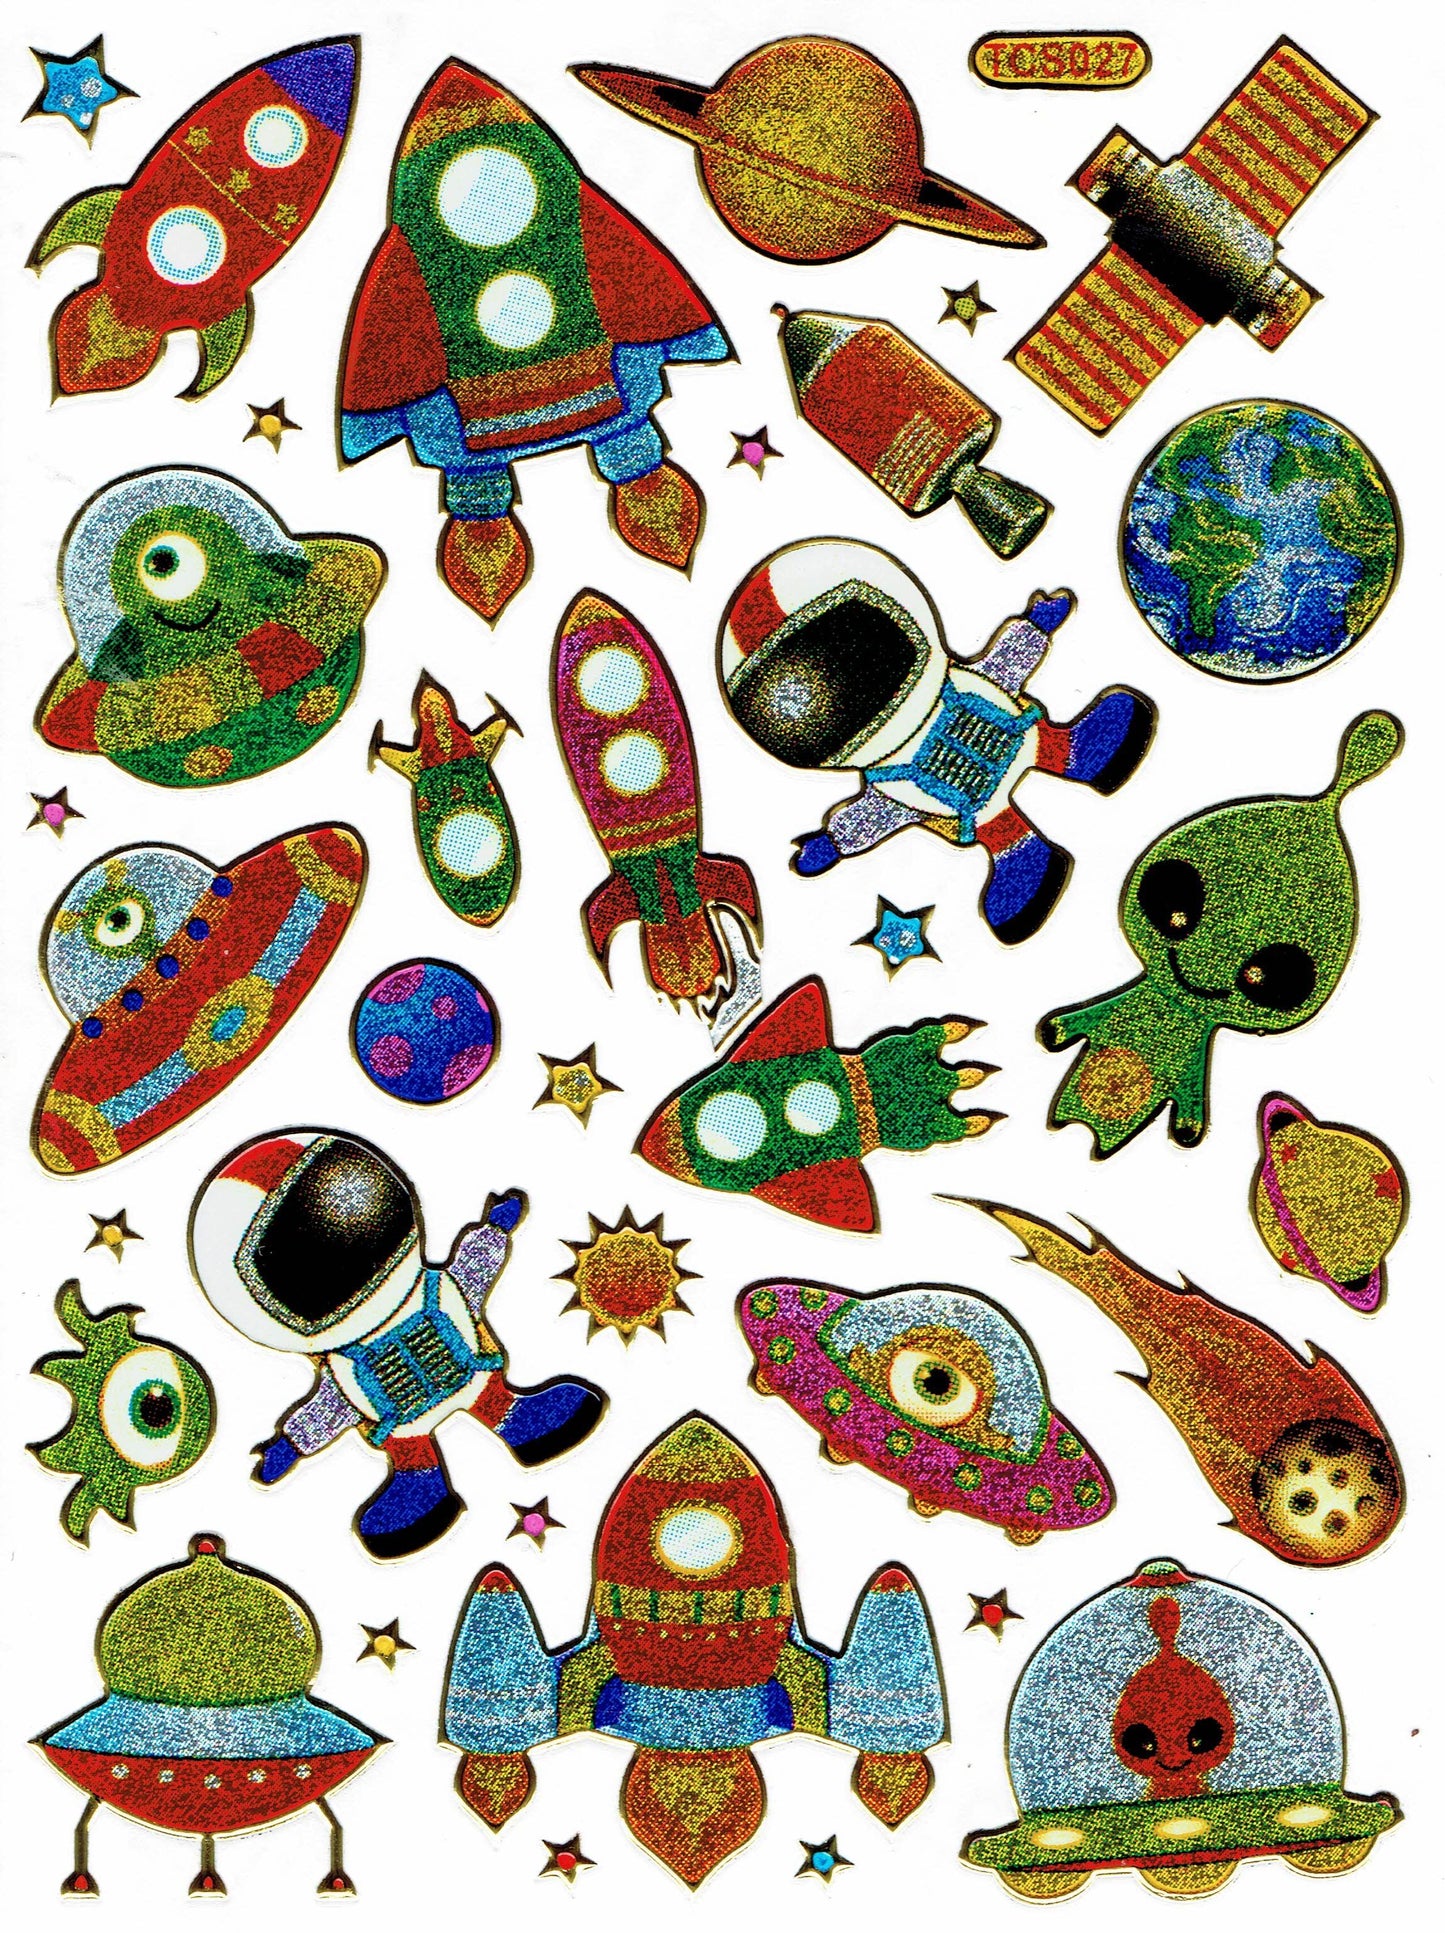 Rakete Ufo Astronaut Aufkleber Sticker metallic Glitzer Effekt Schule Kinder Basteln Kindergarten 1 Bogen 300